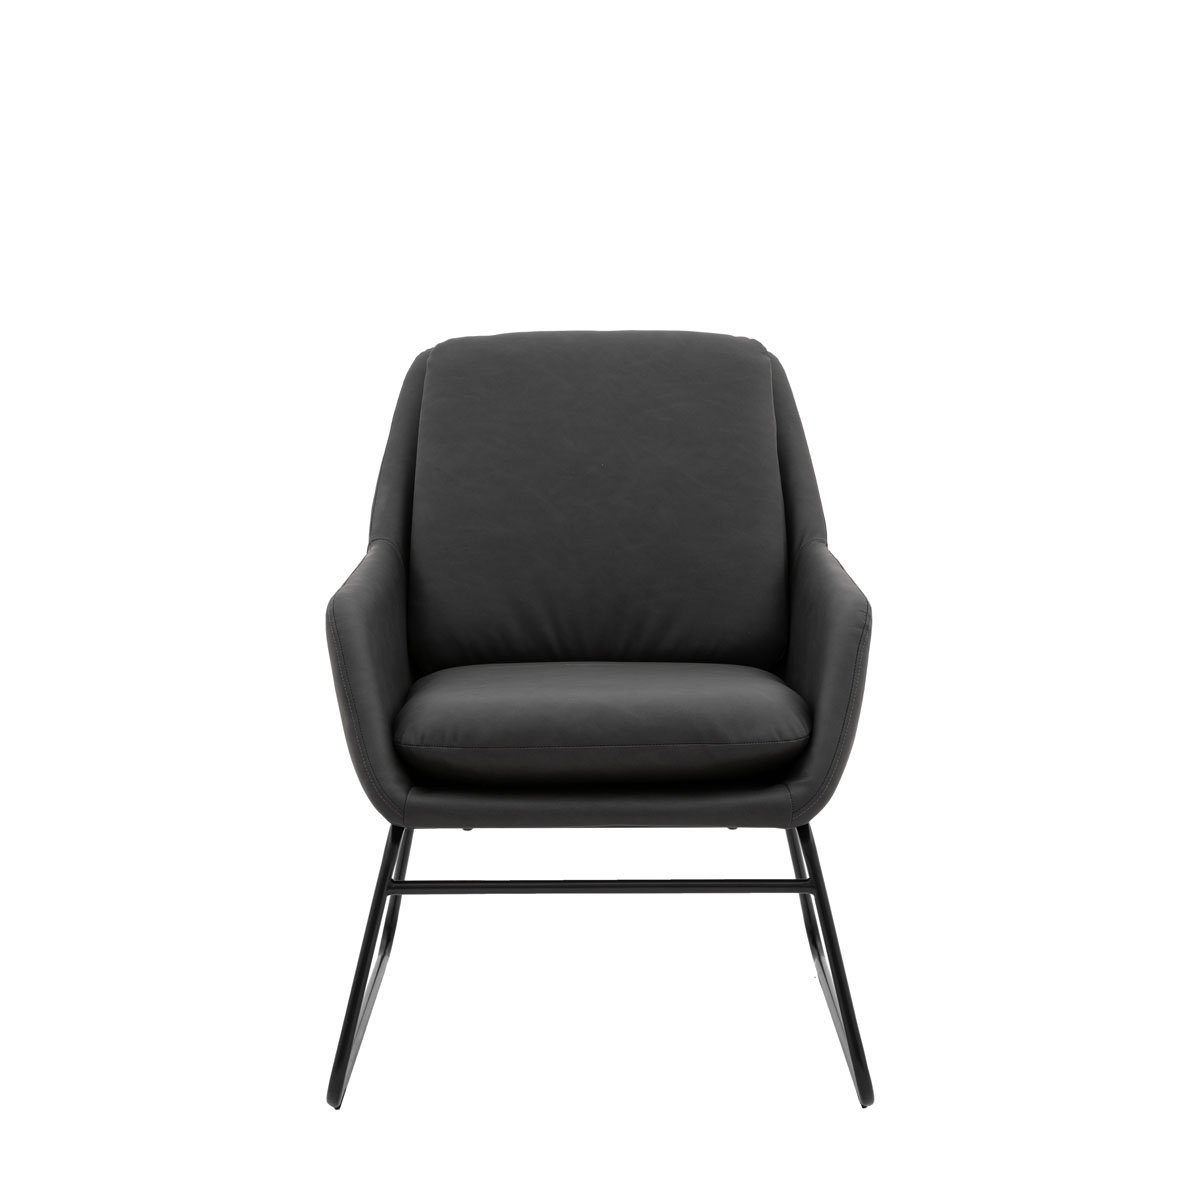 Funton Chair Charcoal 635x885x835mm